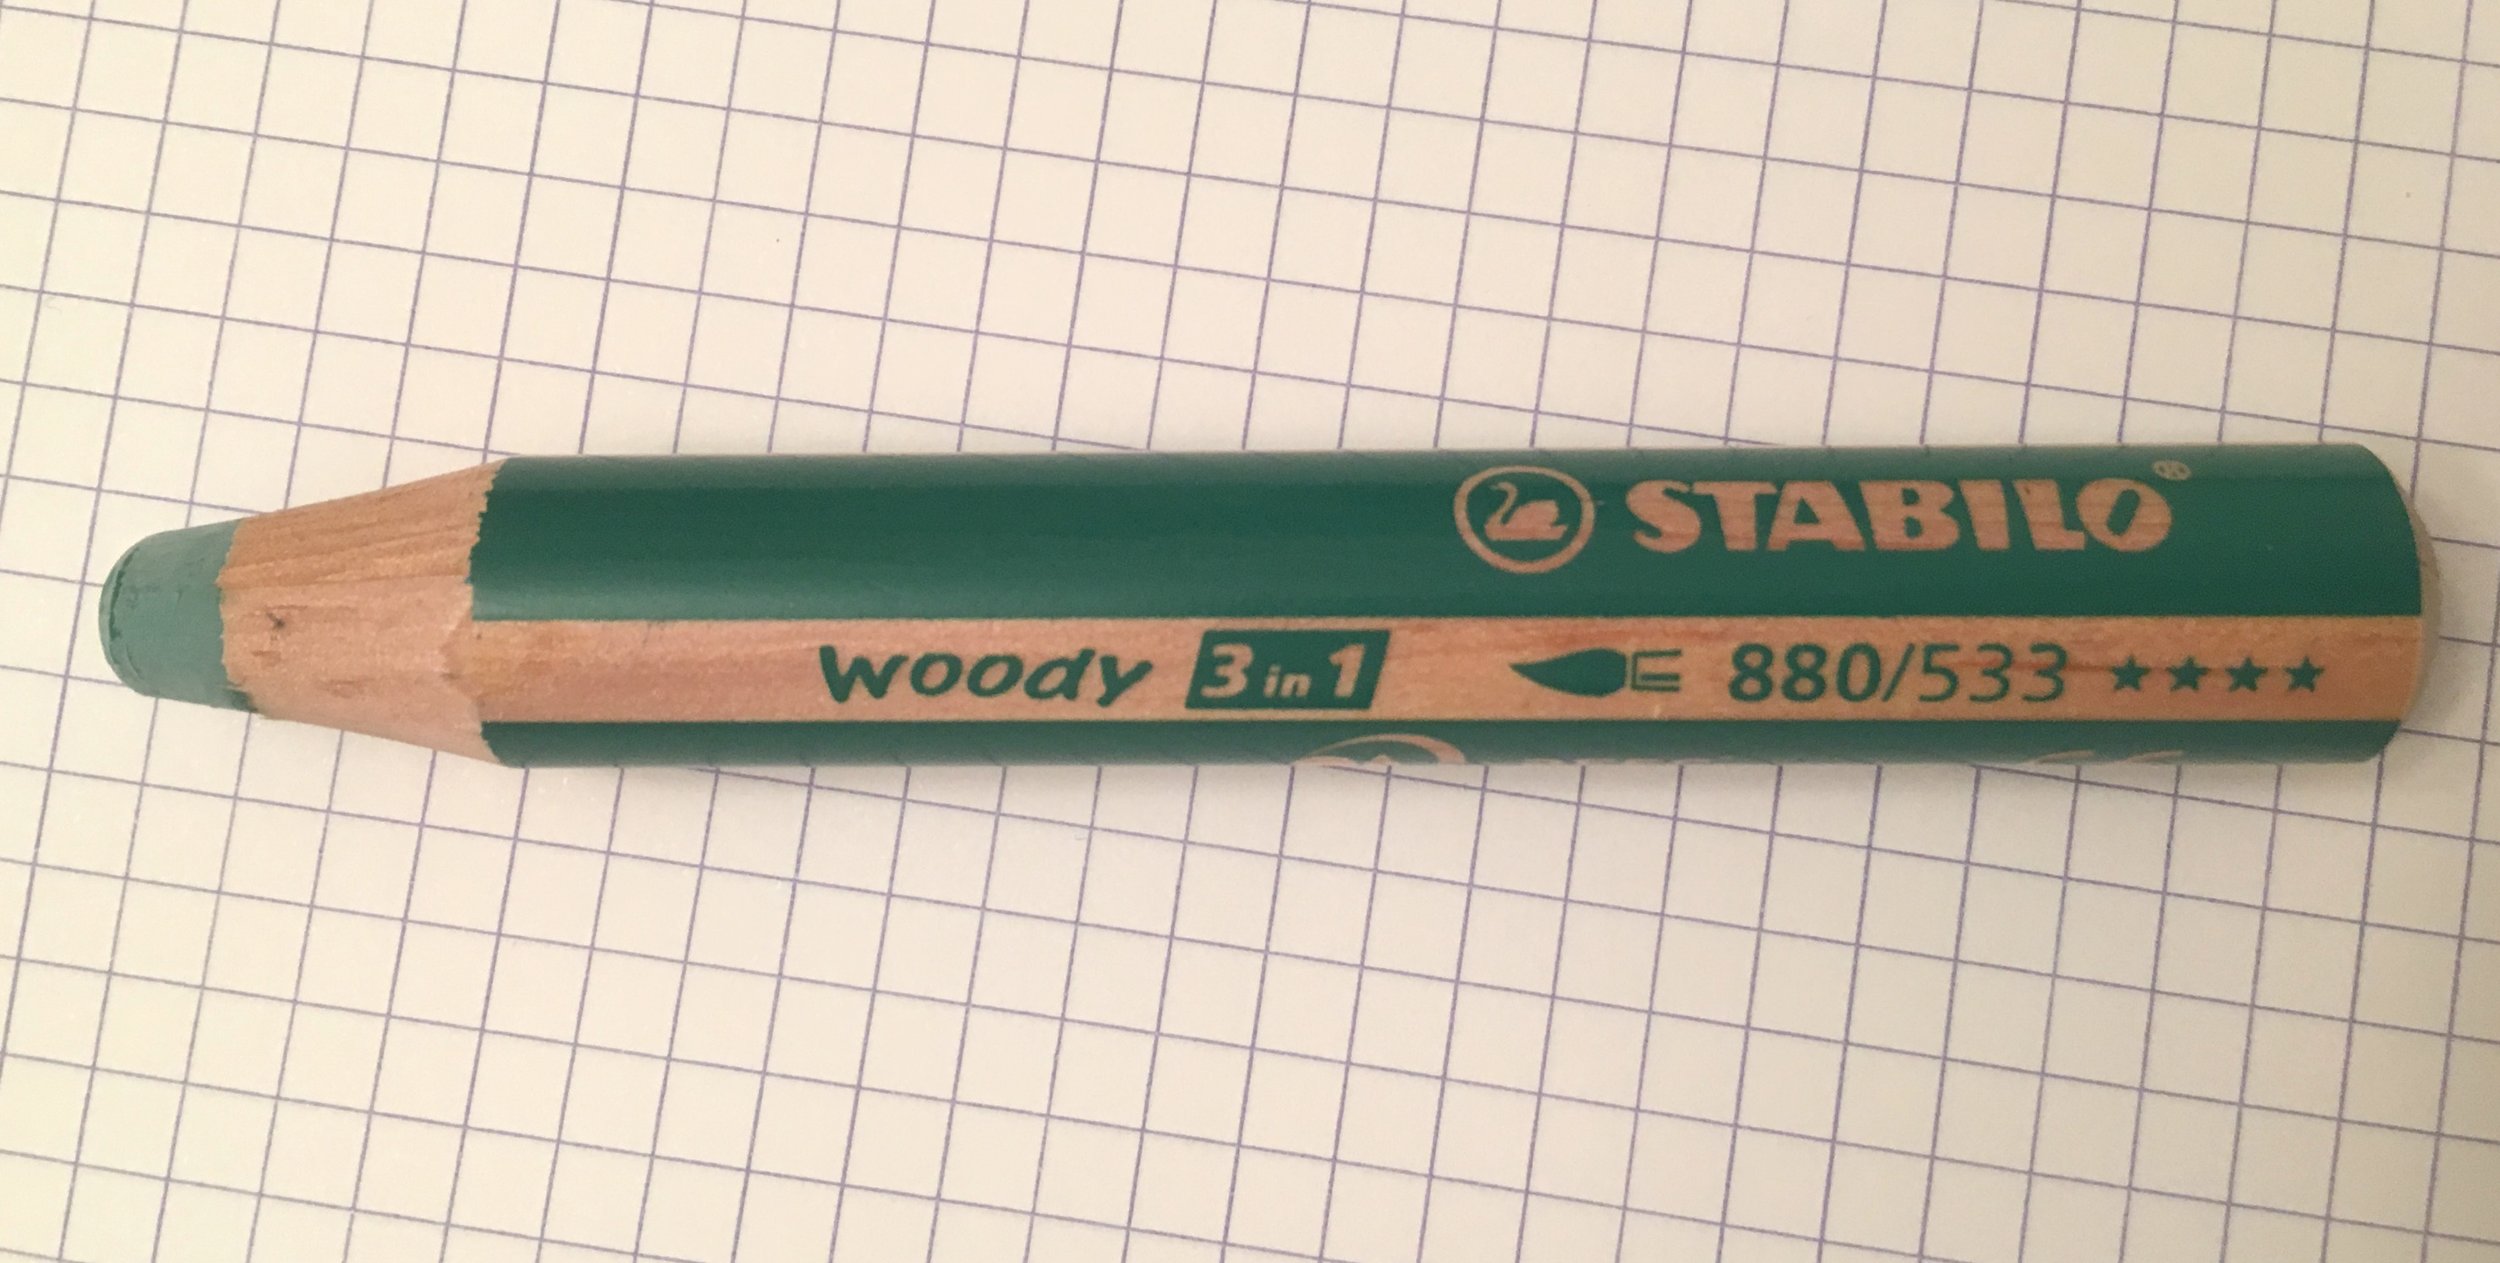 STABILO Woody 3-in-1 Set of 6 w/Sharpener